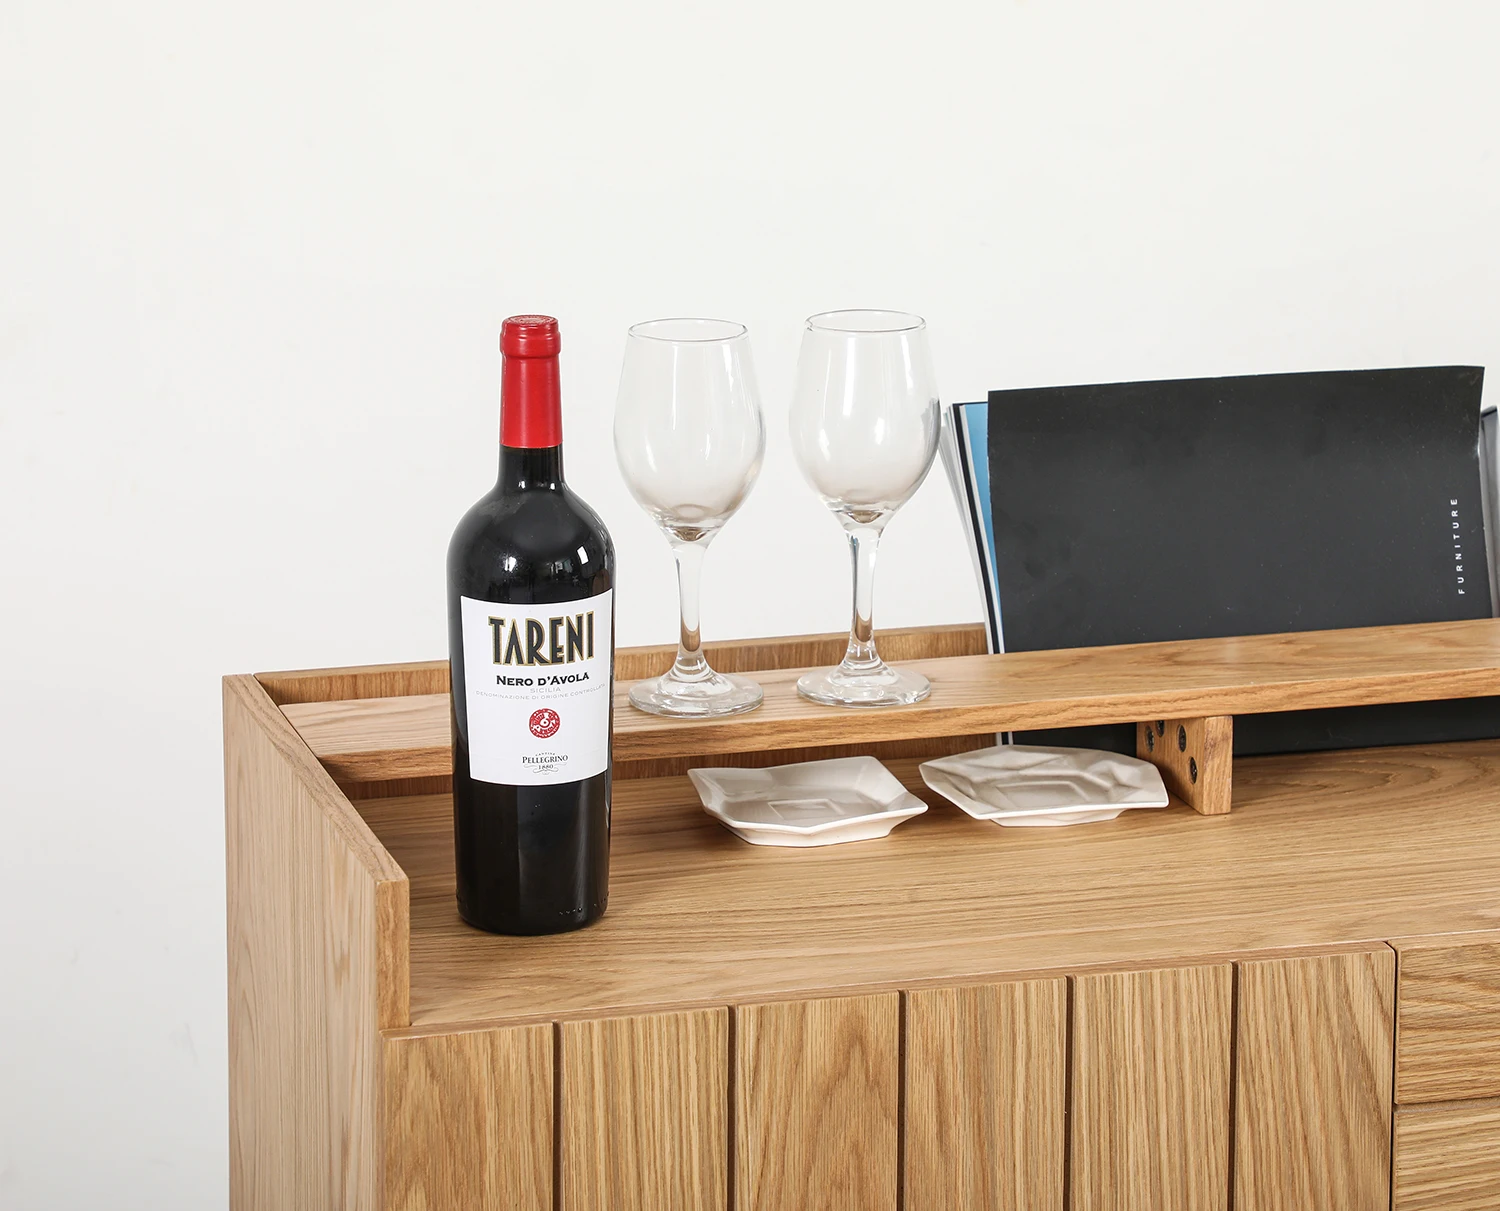 High Quality Custom Midcentury Modern Luxury Sideboard Buffet Cabinets Buffet Table